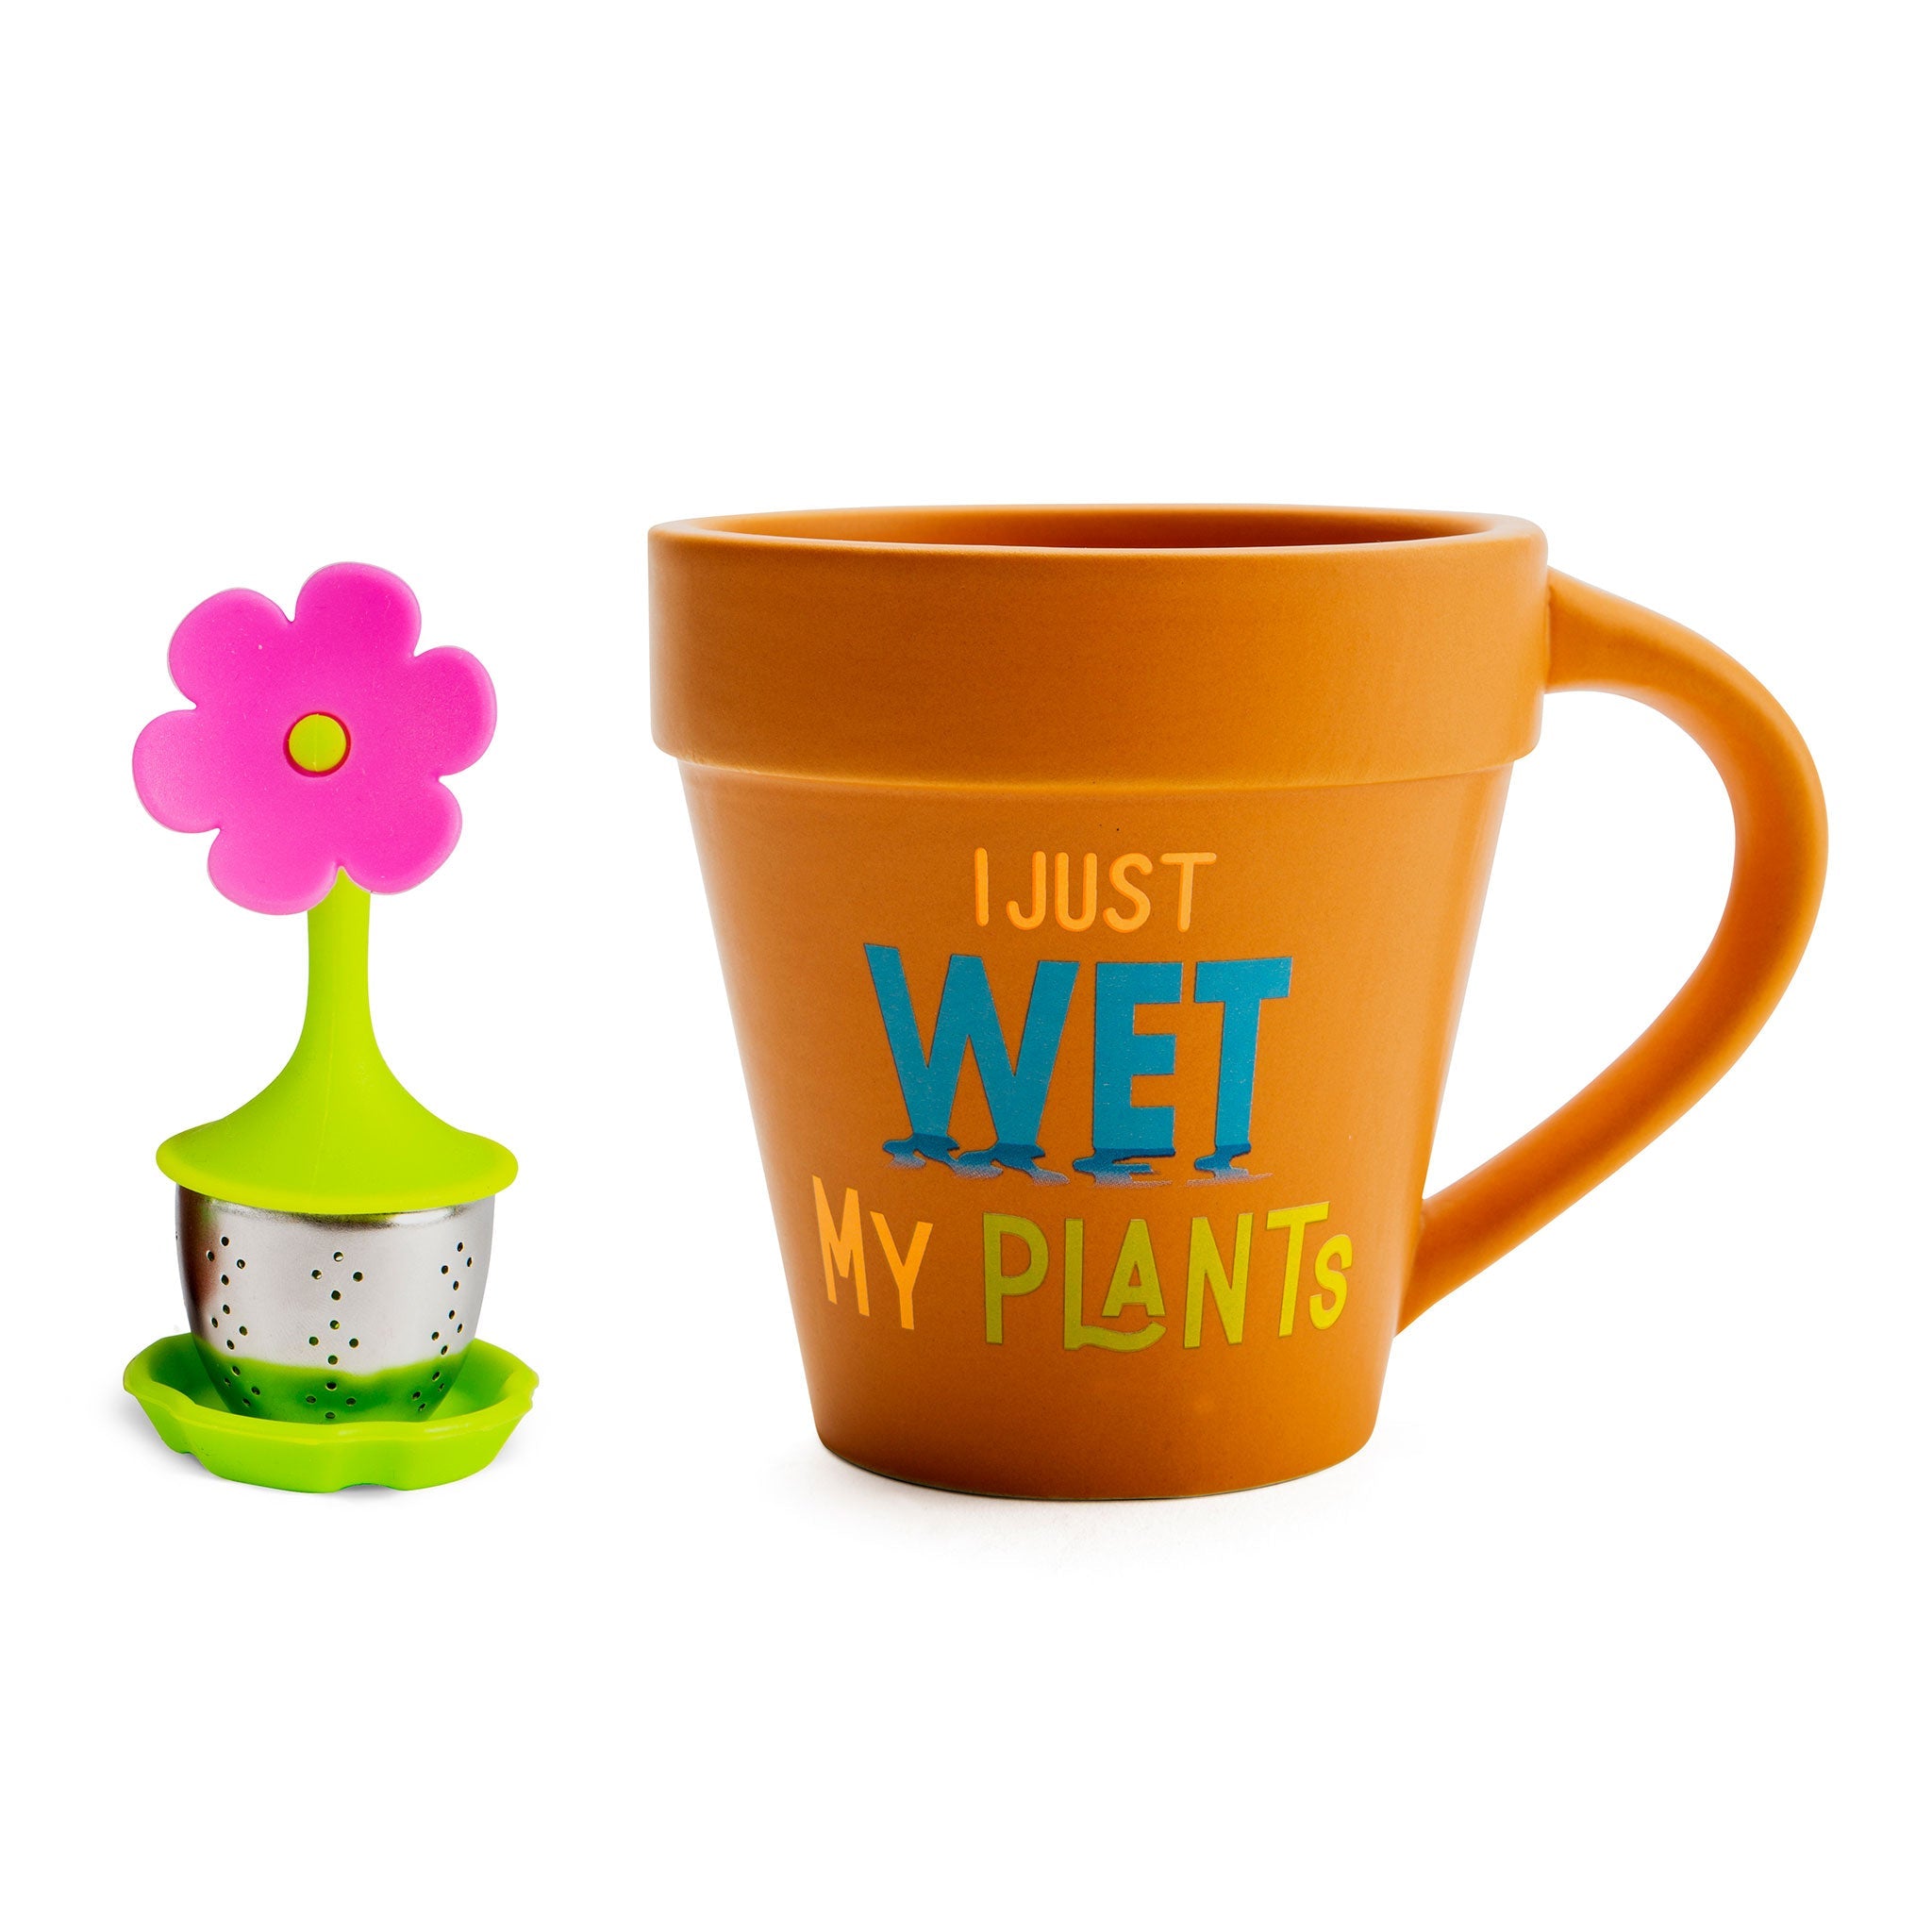 I Just Wet My Plants! - Tea Infuser Mug Set